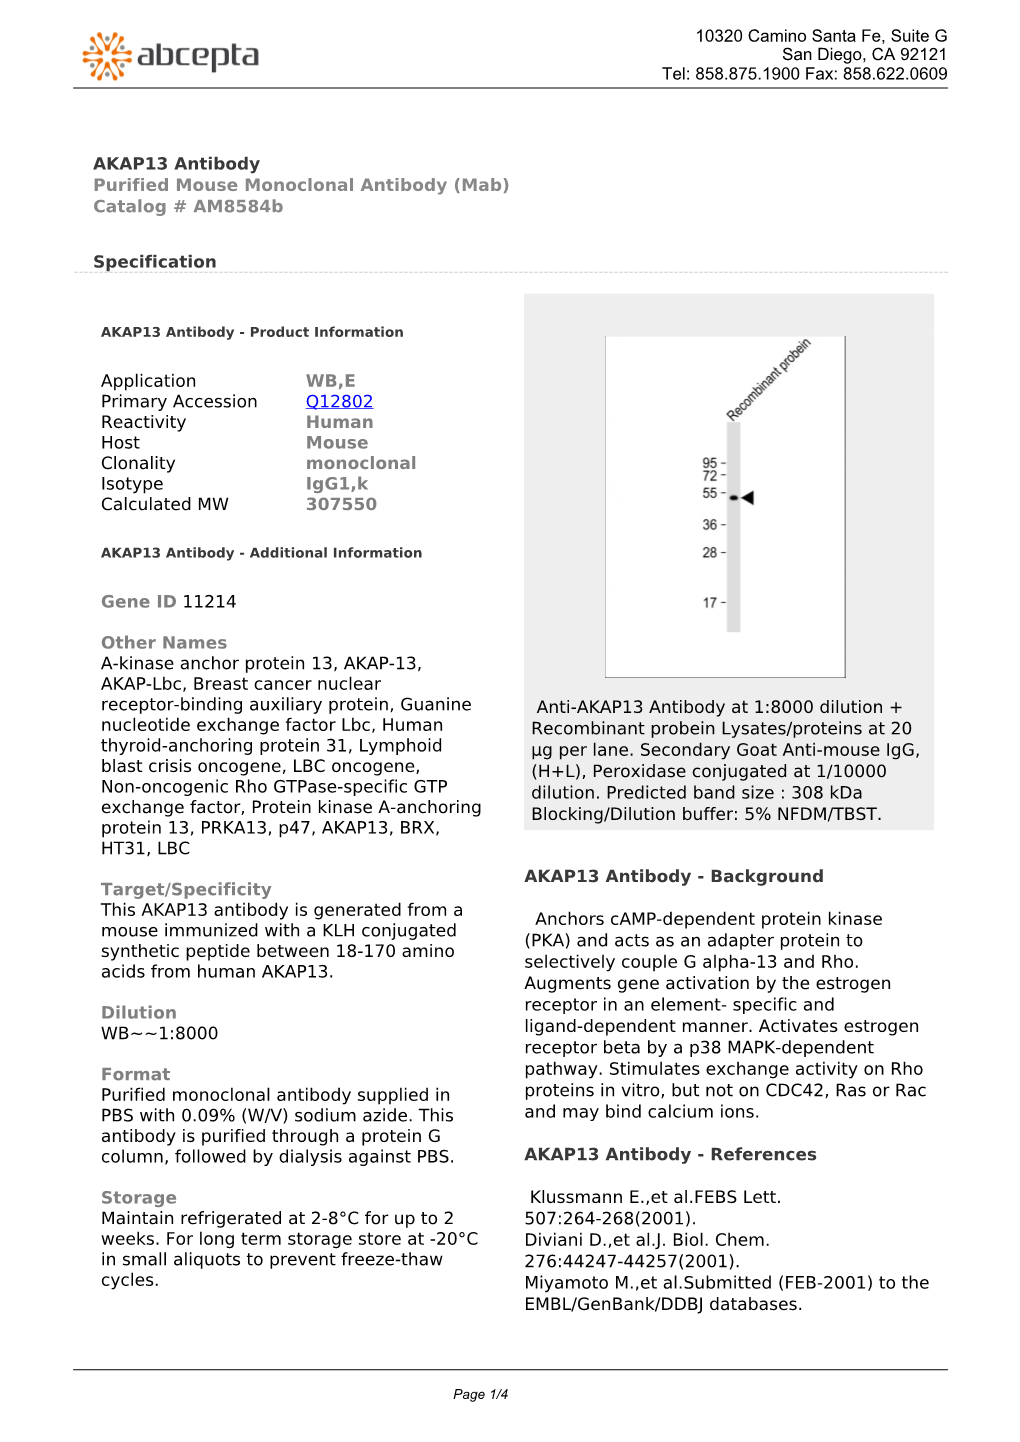 AKAP13 Antibody Purified Mouse Monoclonal Antibody (Mab) Catalog # Am8584b